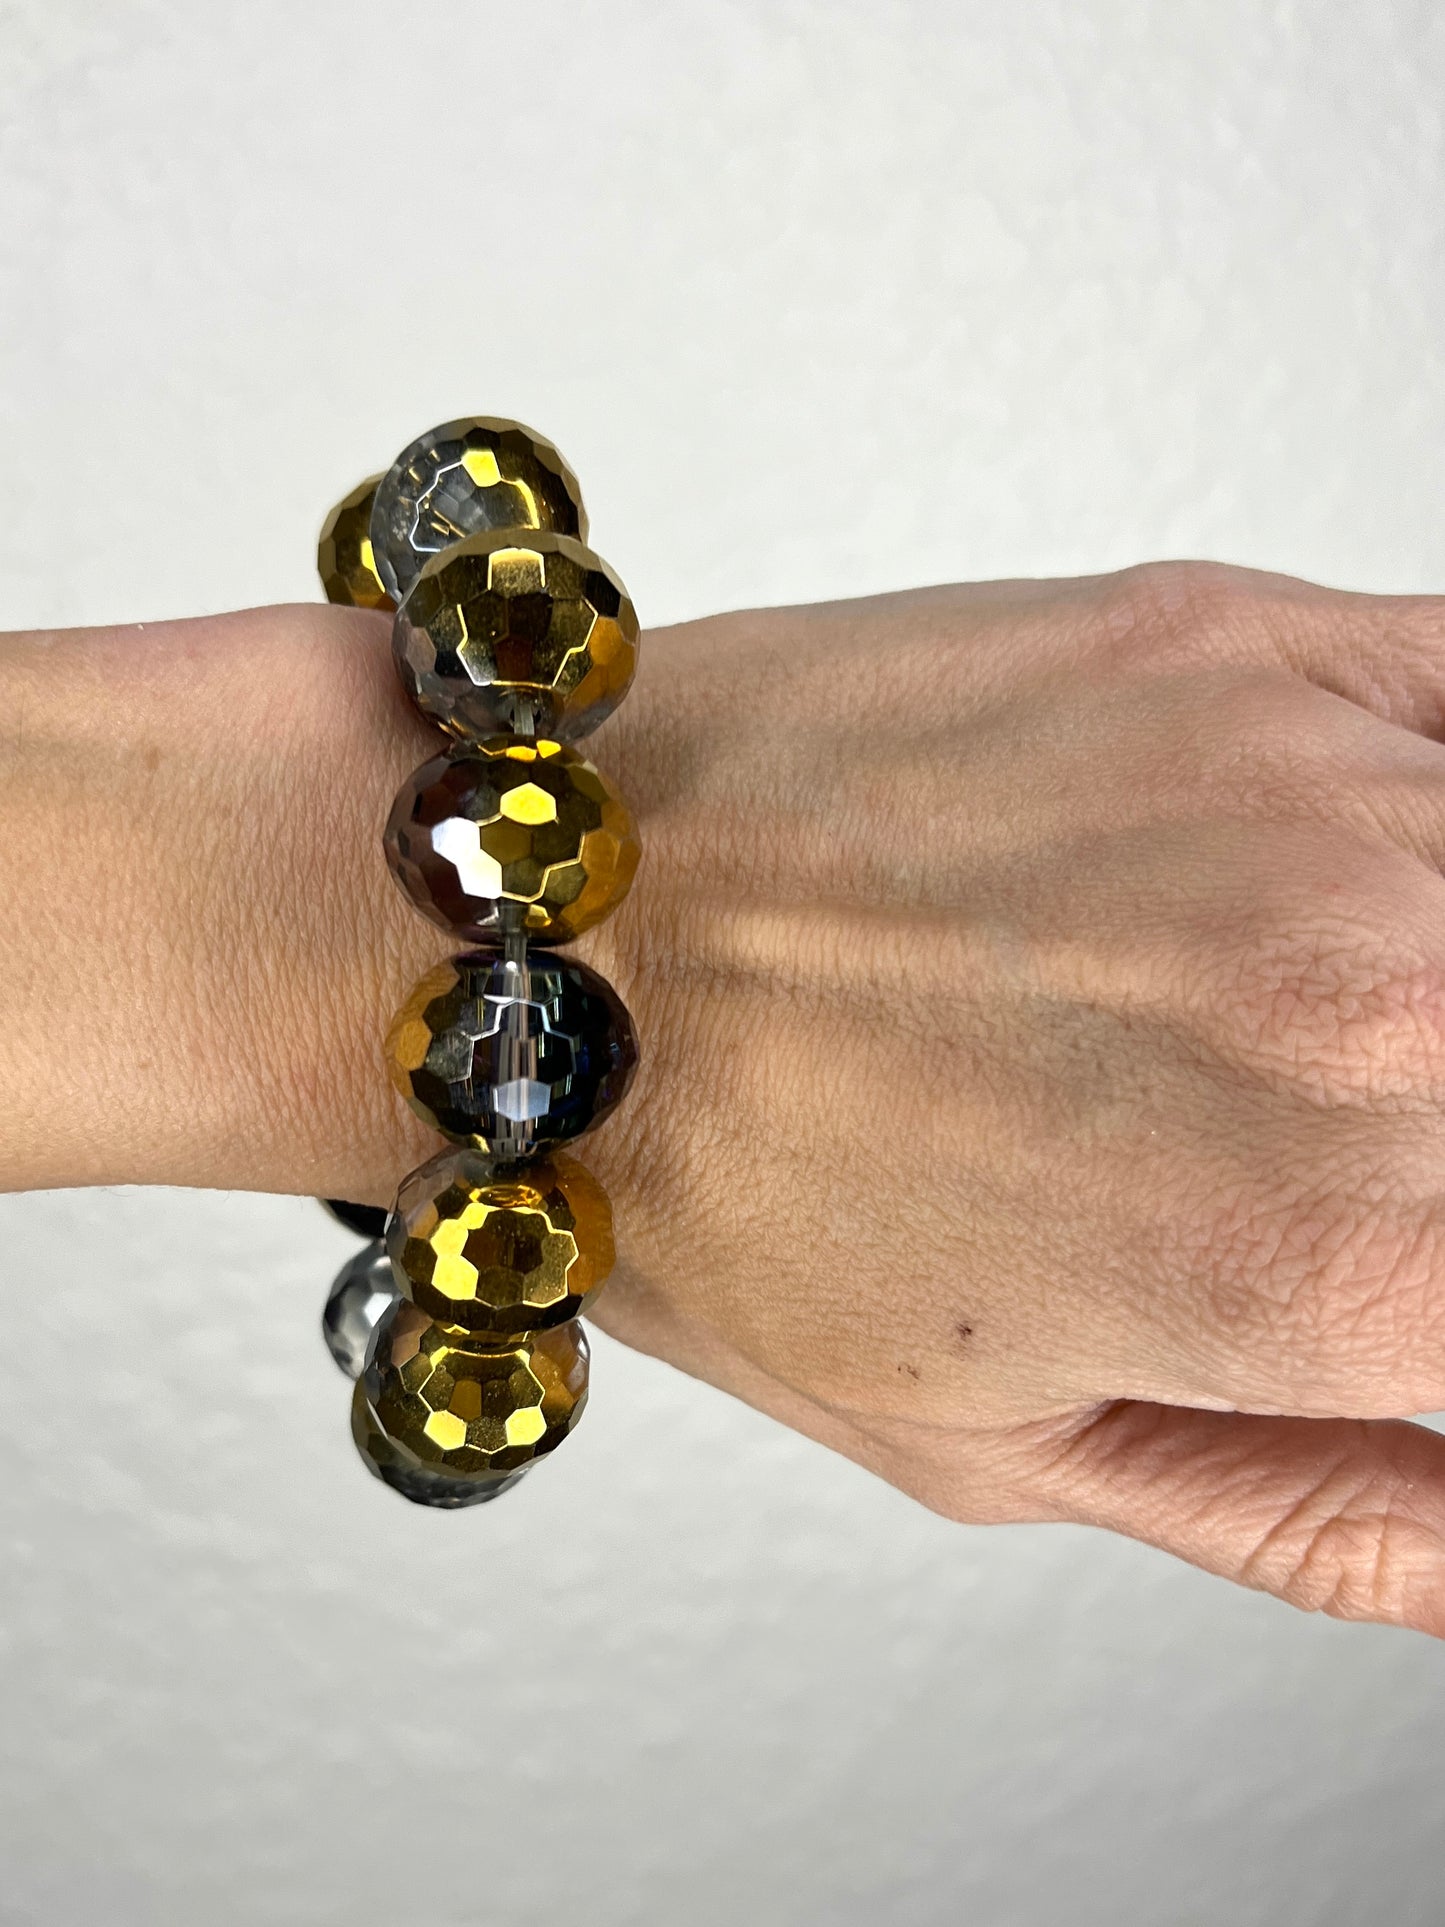 Golden Iridescent Crystal Ball Bracelet